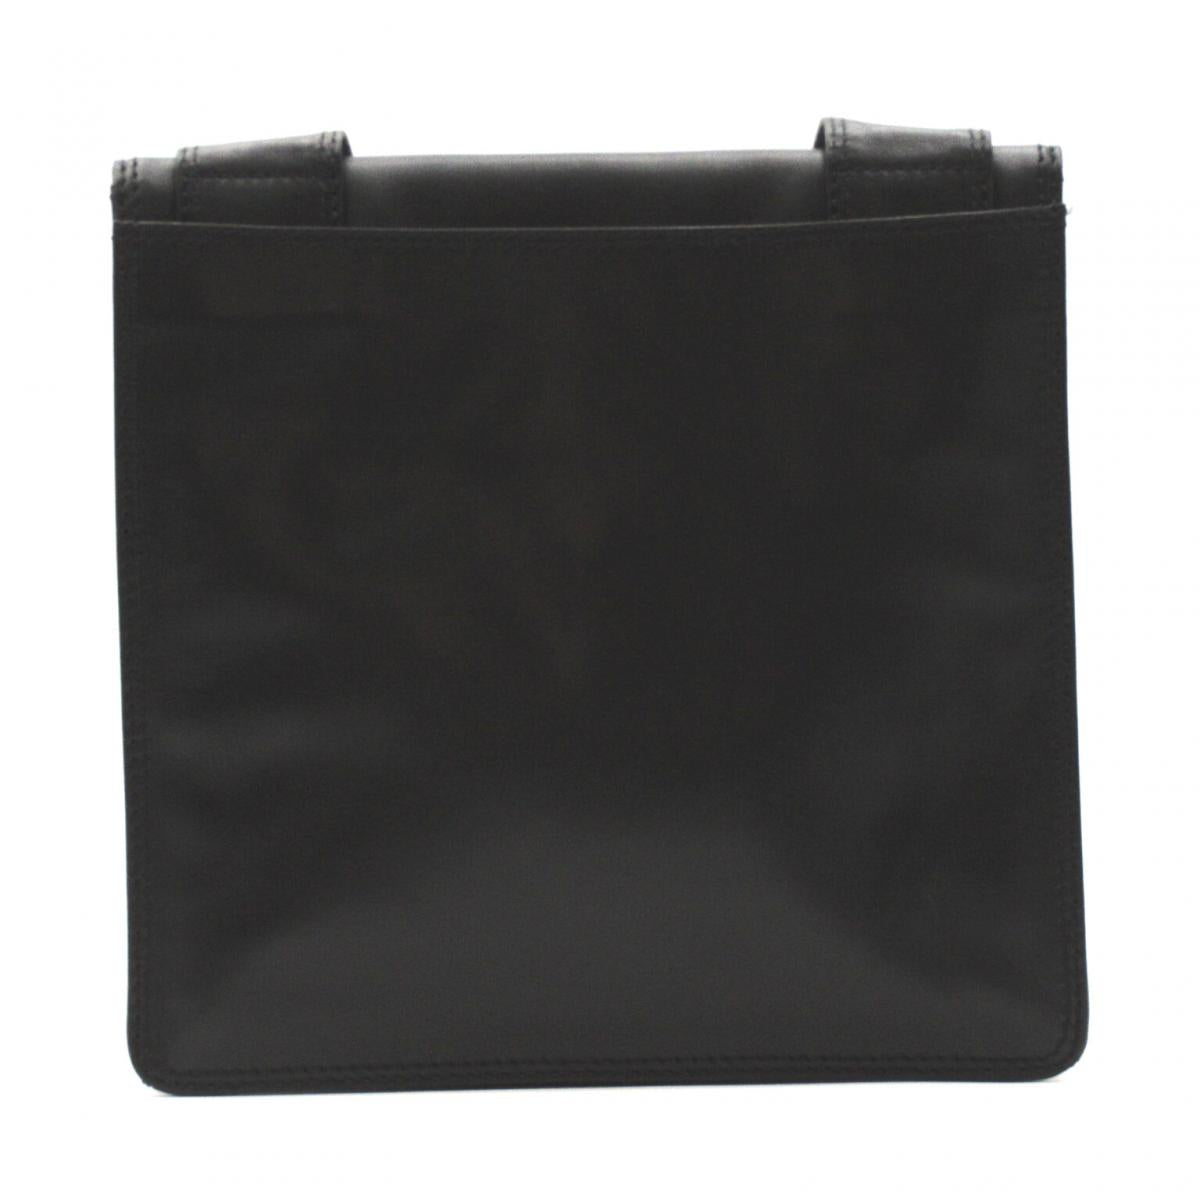 CC Leather Crossbody Bag